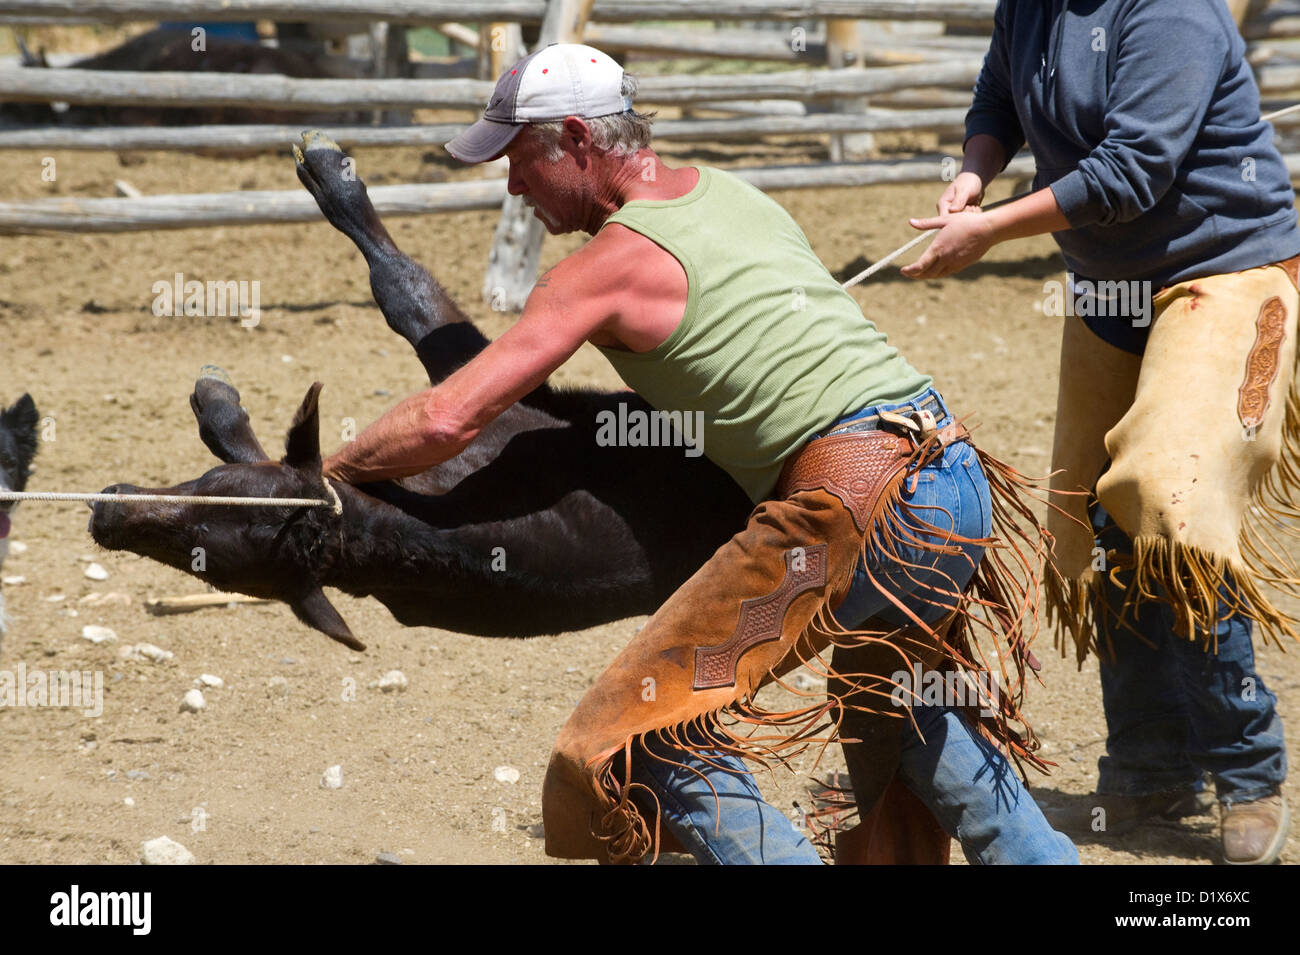 A cowboy tackles a calf during a branding at the Dalton Ranch in the Clover Valley, NV Stock Photo